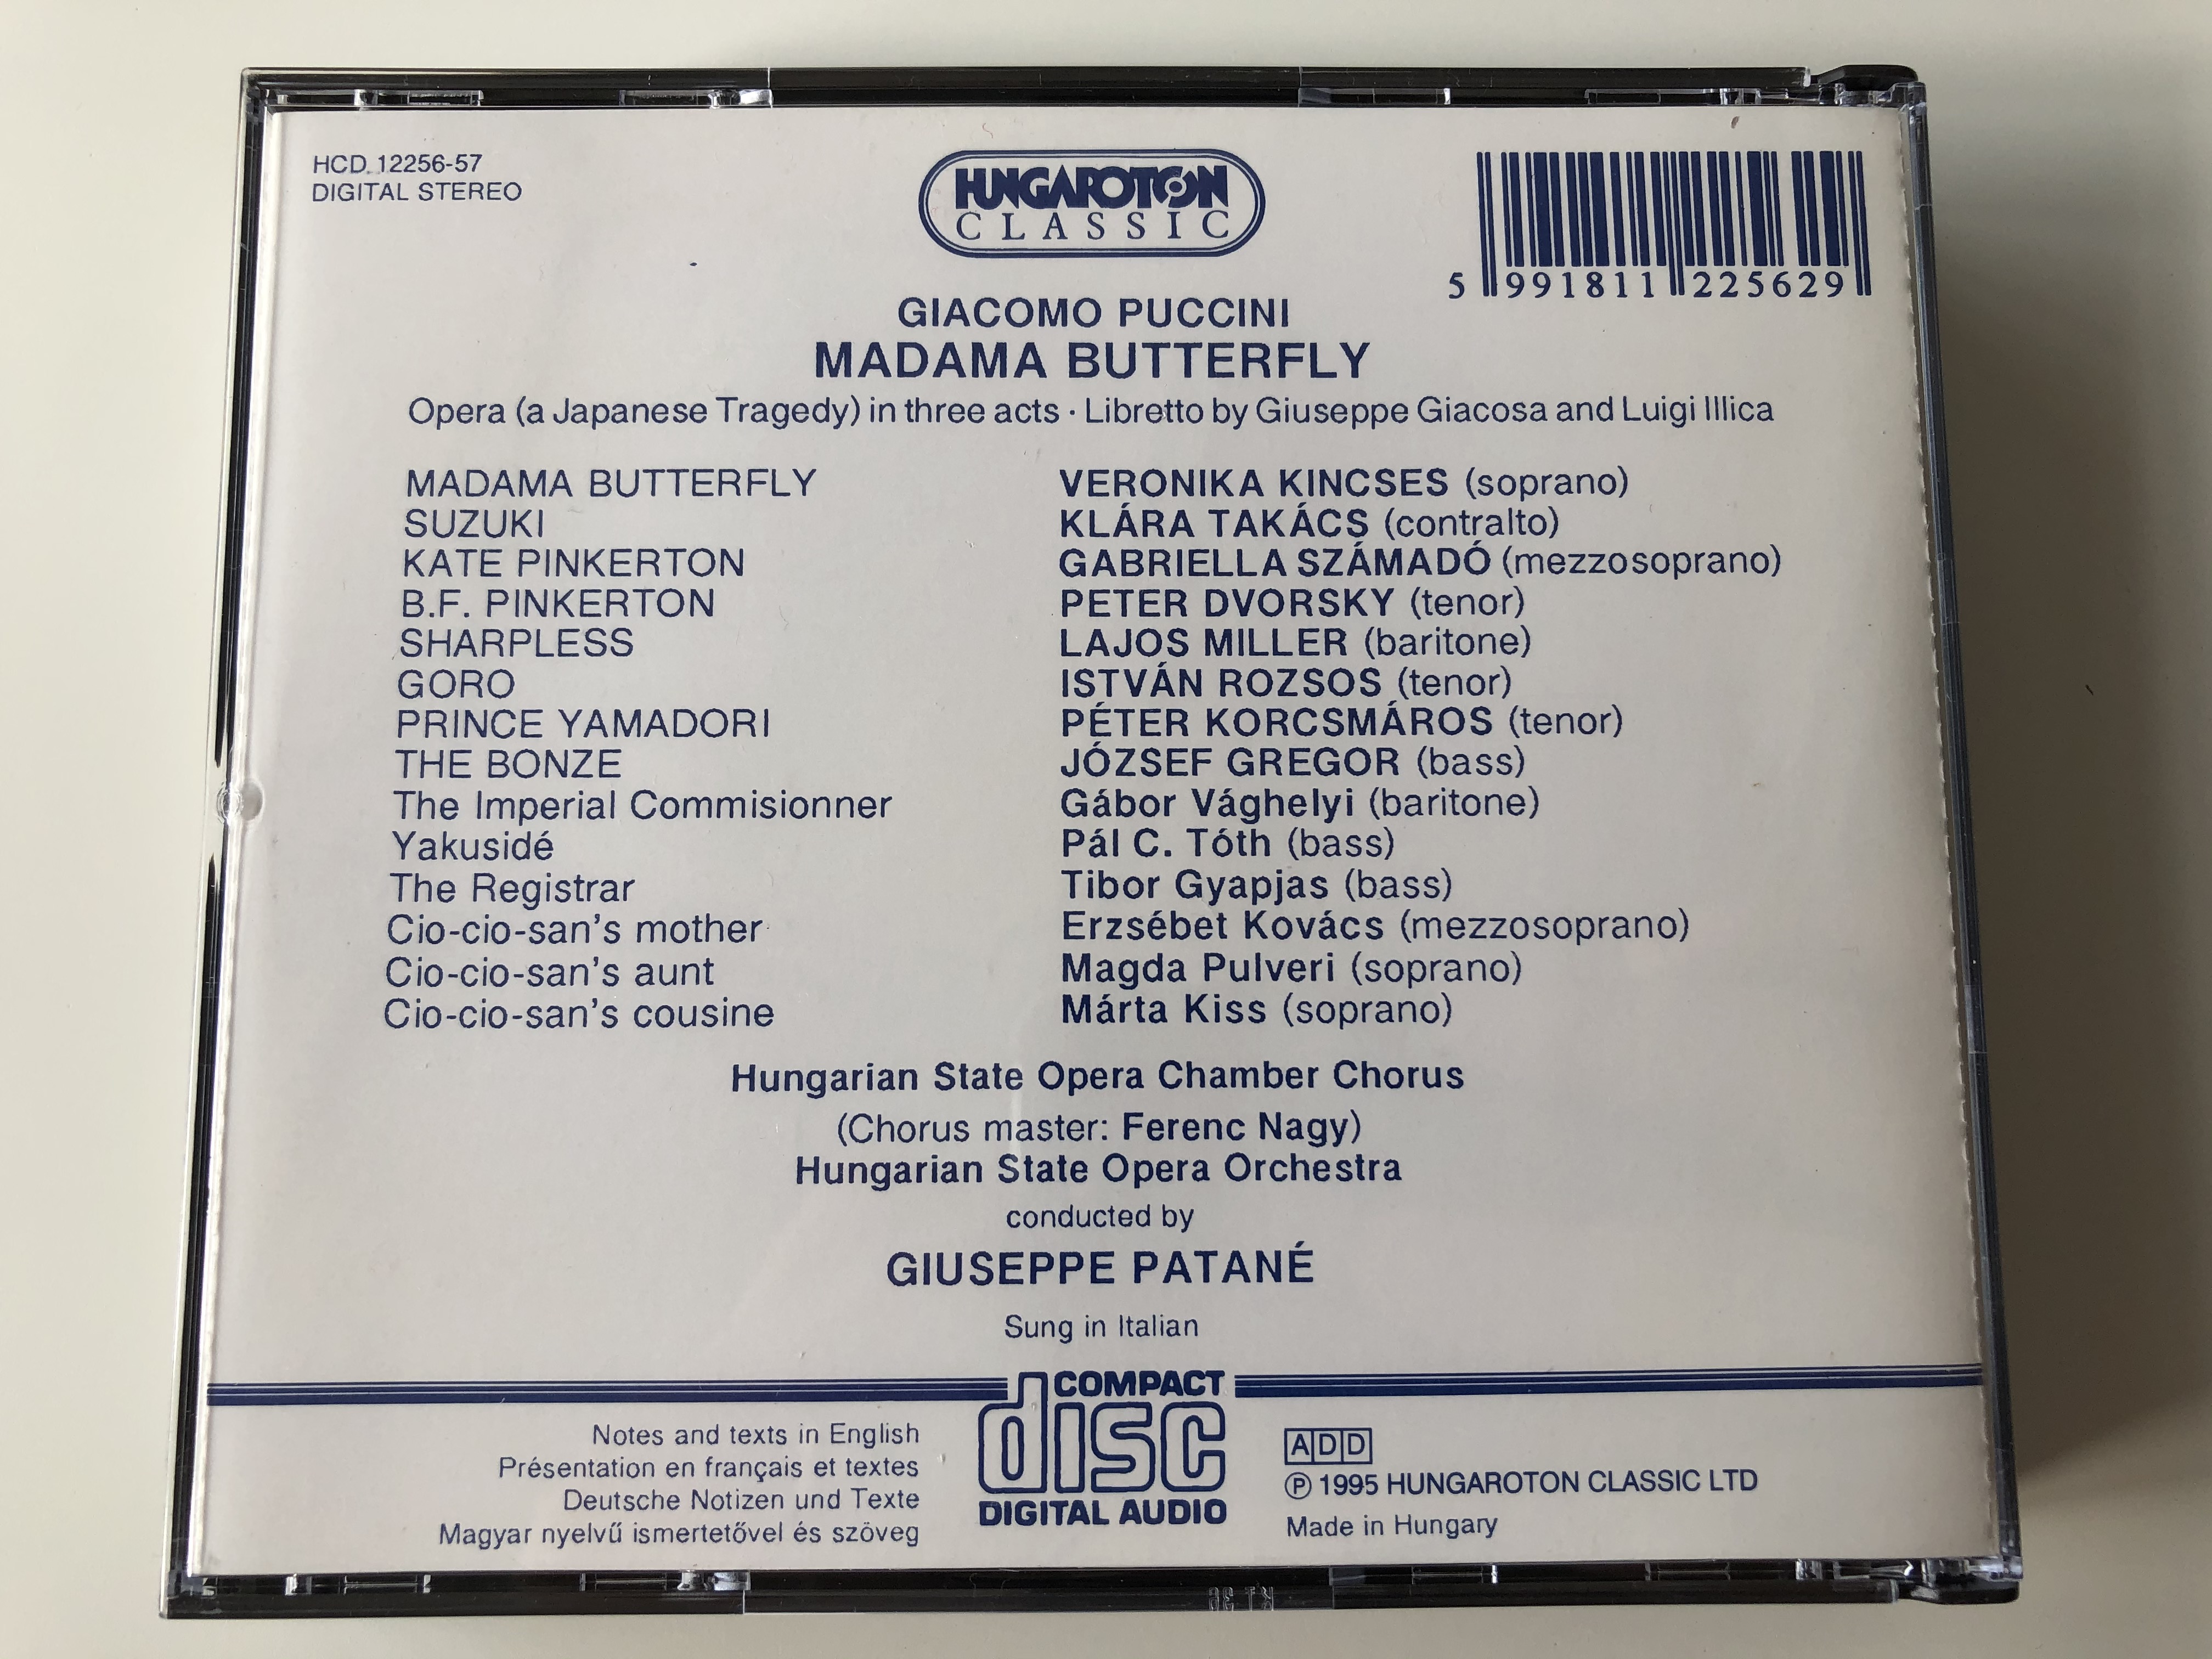 puccini-madama-butterfly-giuseppe-patan-veronika-kincses-peter-dvorsk-lajos-miller-kl-ra-tak-cs-hungaroton-classic-2x-audio-cd-1994-stereo-hcd-12256-57-6-.jpg